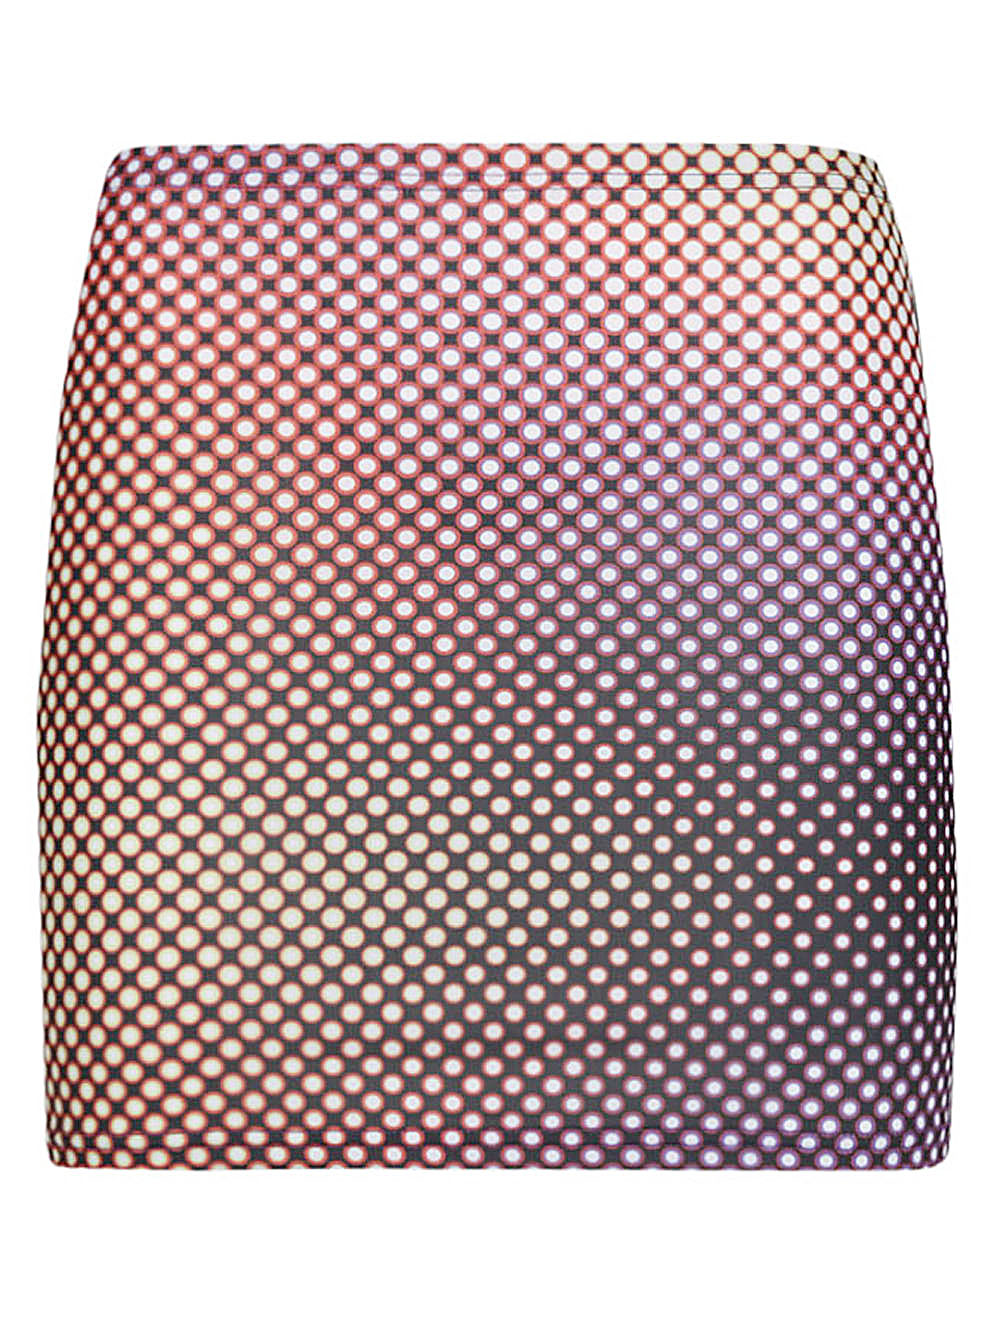 Sinead gorey SINEAD GOREY- Digitally Print Lycra Bodycon Skirt